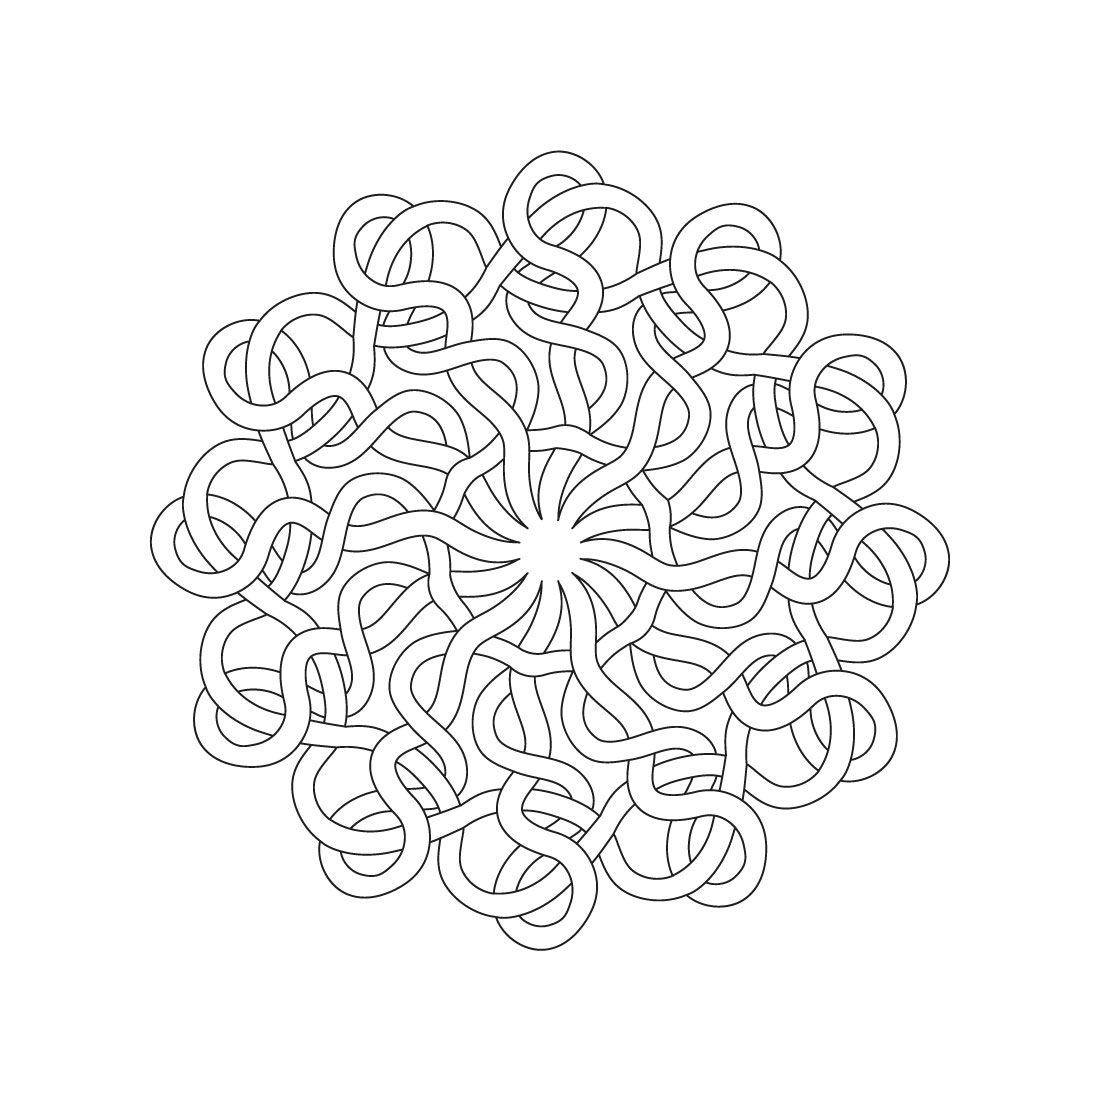 bundle of 10 celtic knot mandala coloring book pages 09 506